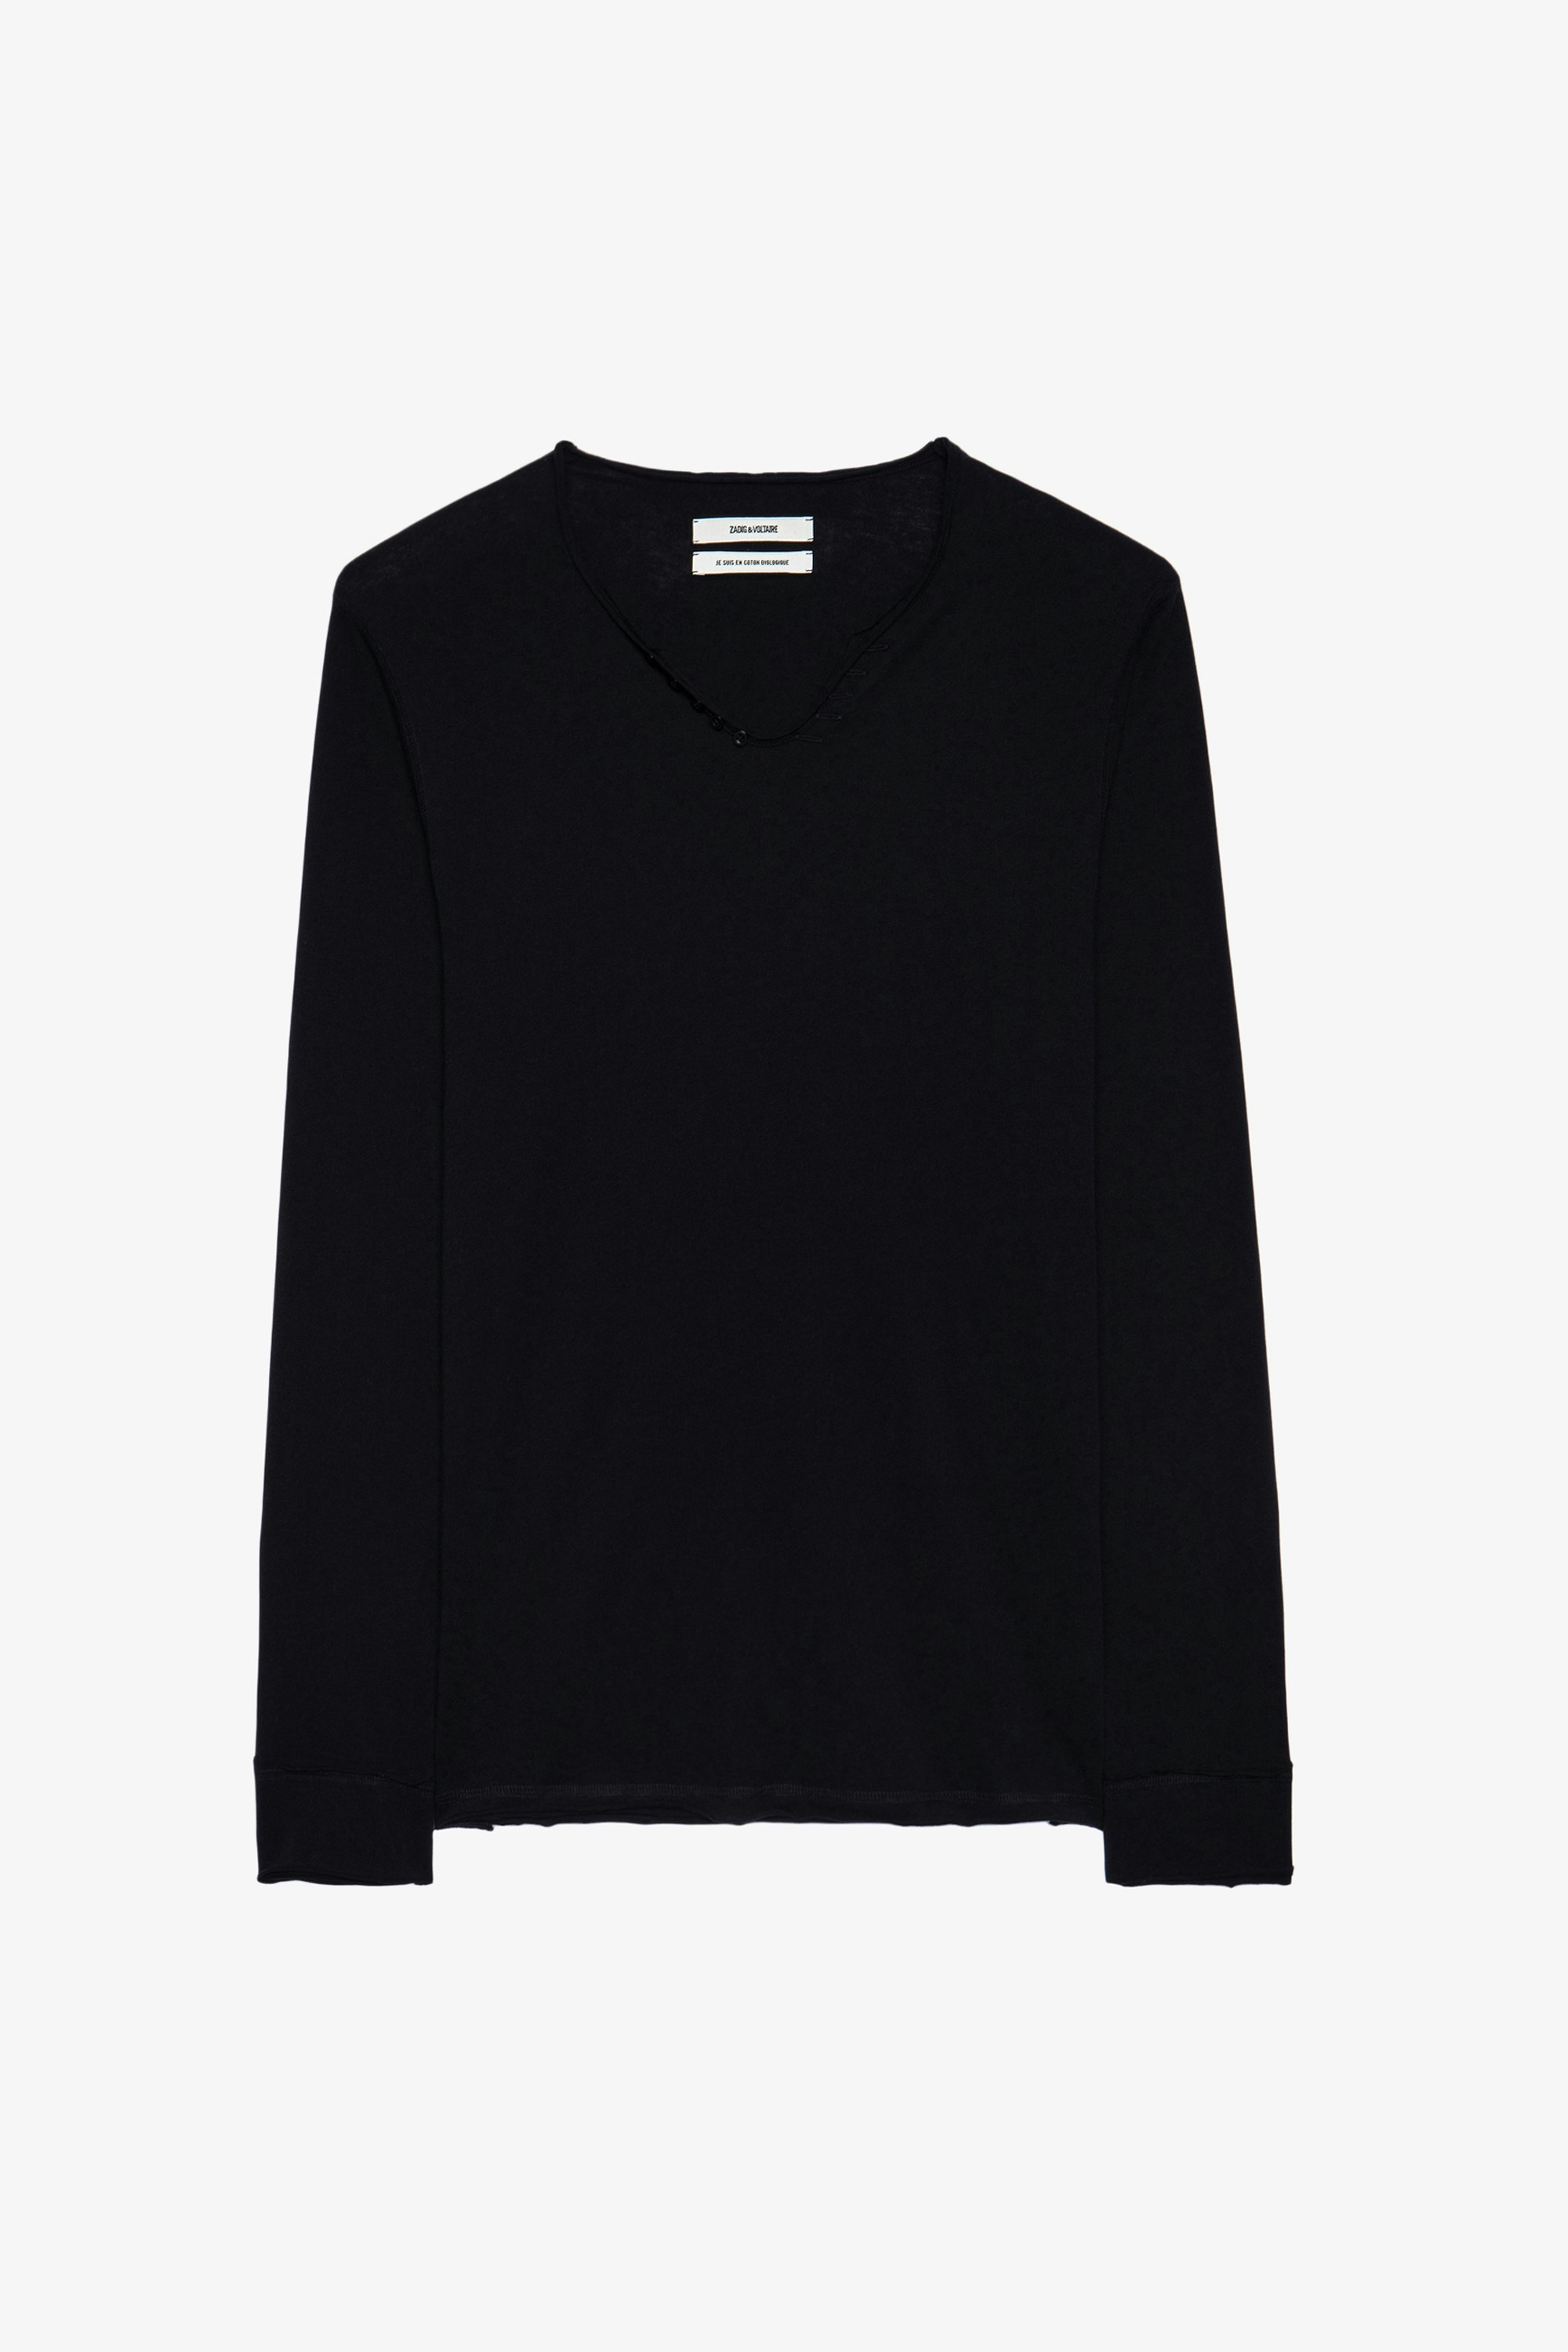 Monastir T-shirt - Men’s black cotton henley T-shirt